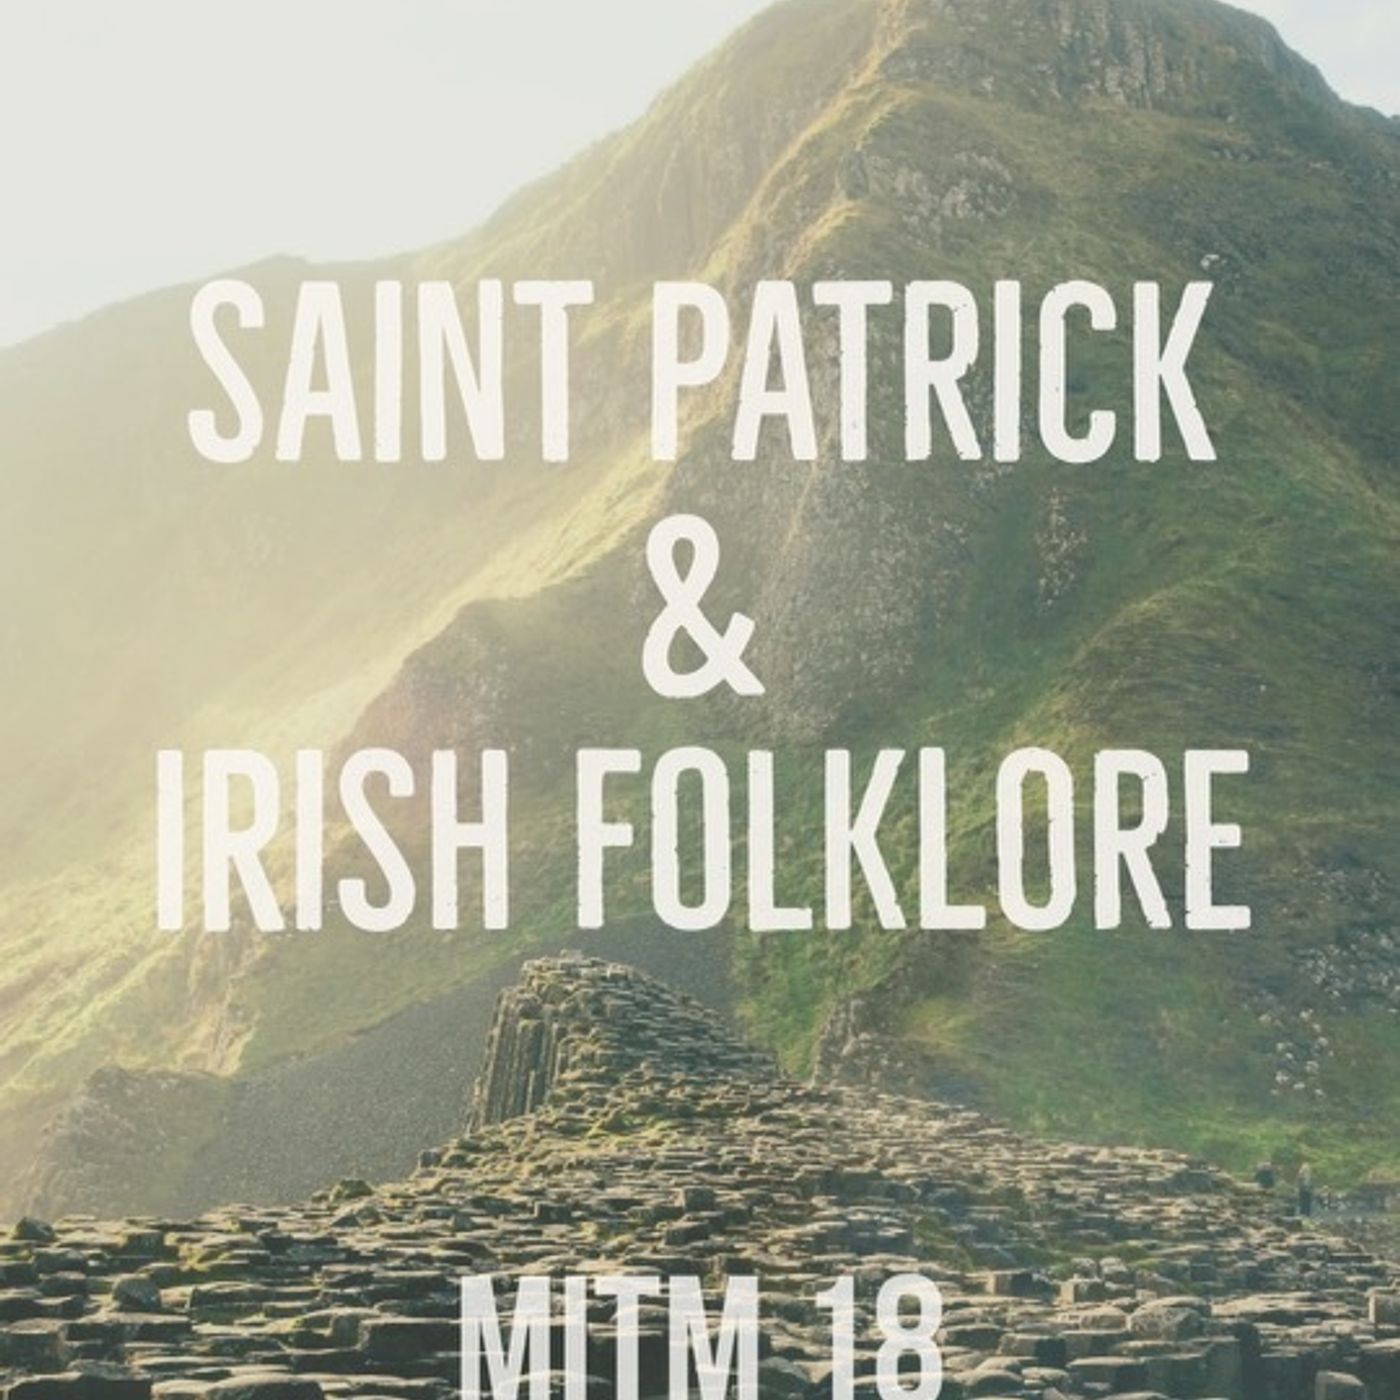 18: St. Patrick & Irish Folklore